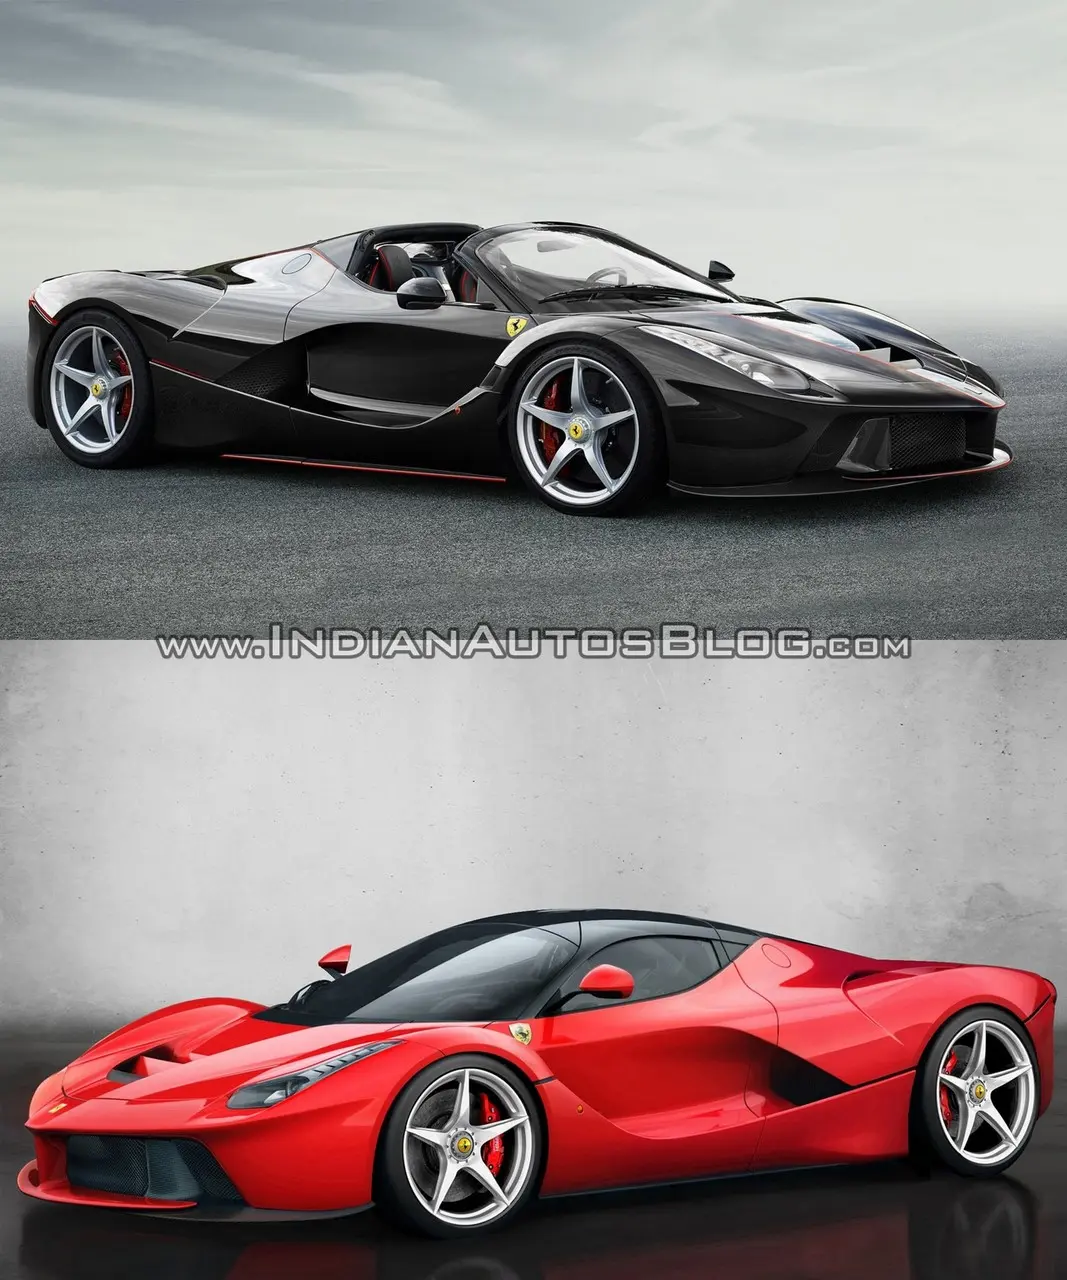 difference between ferrari and laferrari aperta - What does Aperta mean on a Ferrari